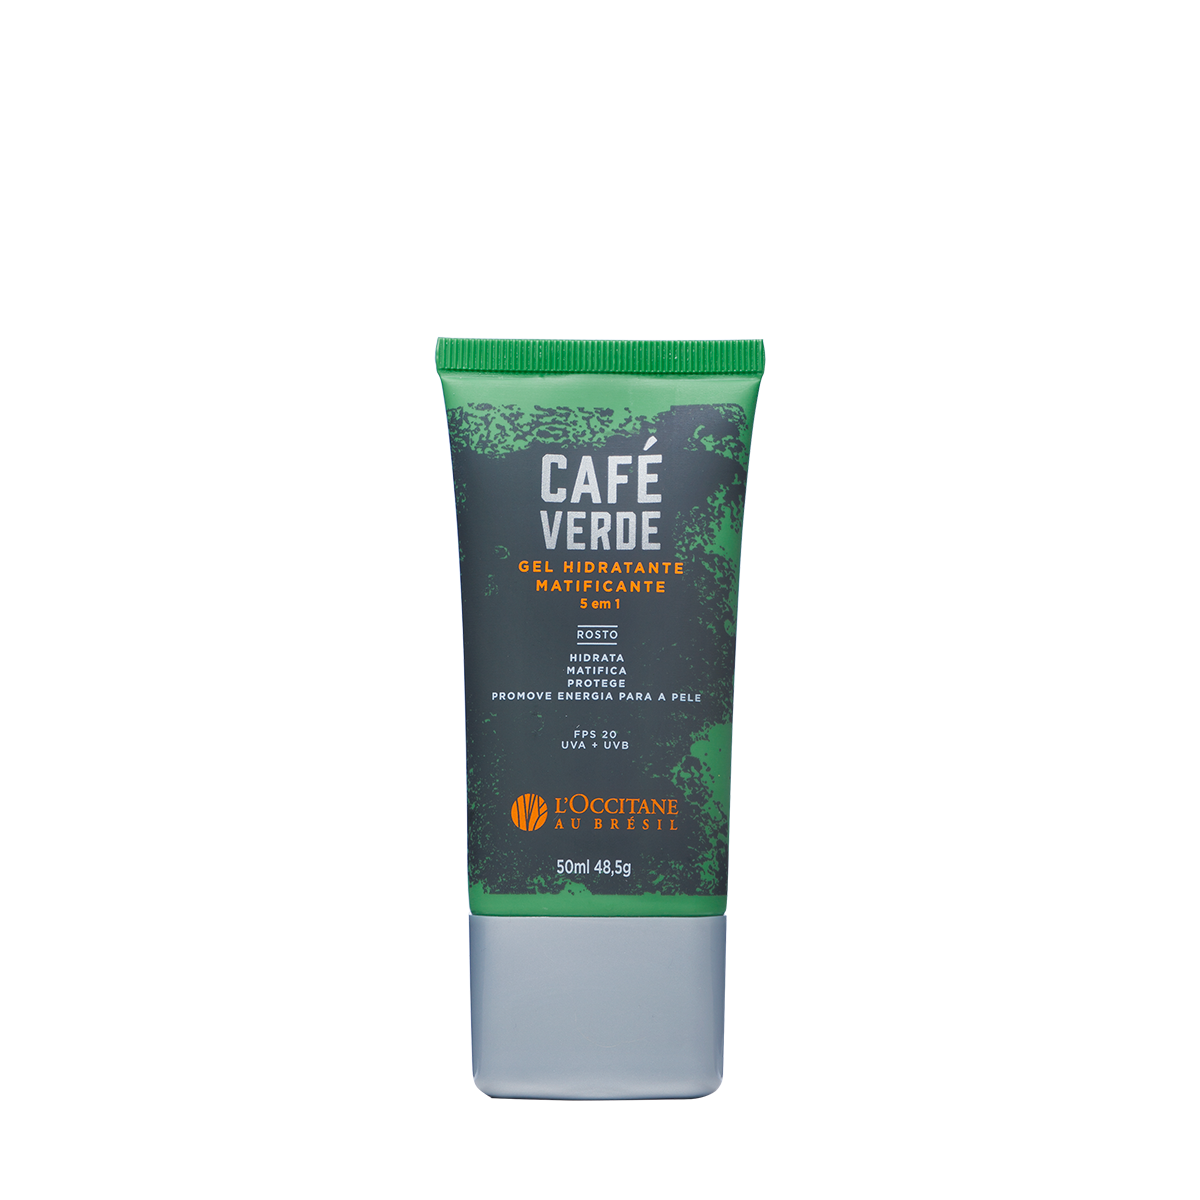 Gel Hidratante Matificante 5 em 1 Café Verde, ,  large